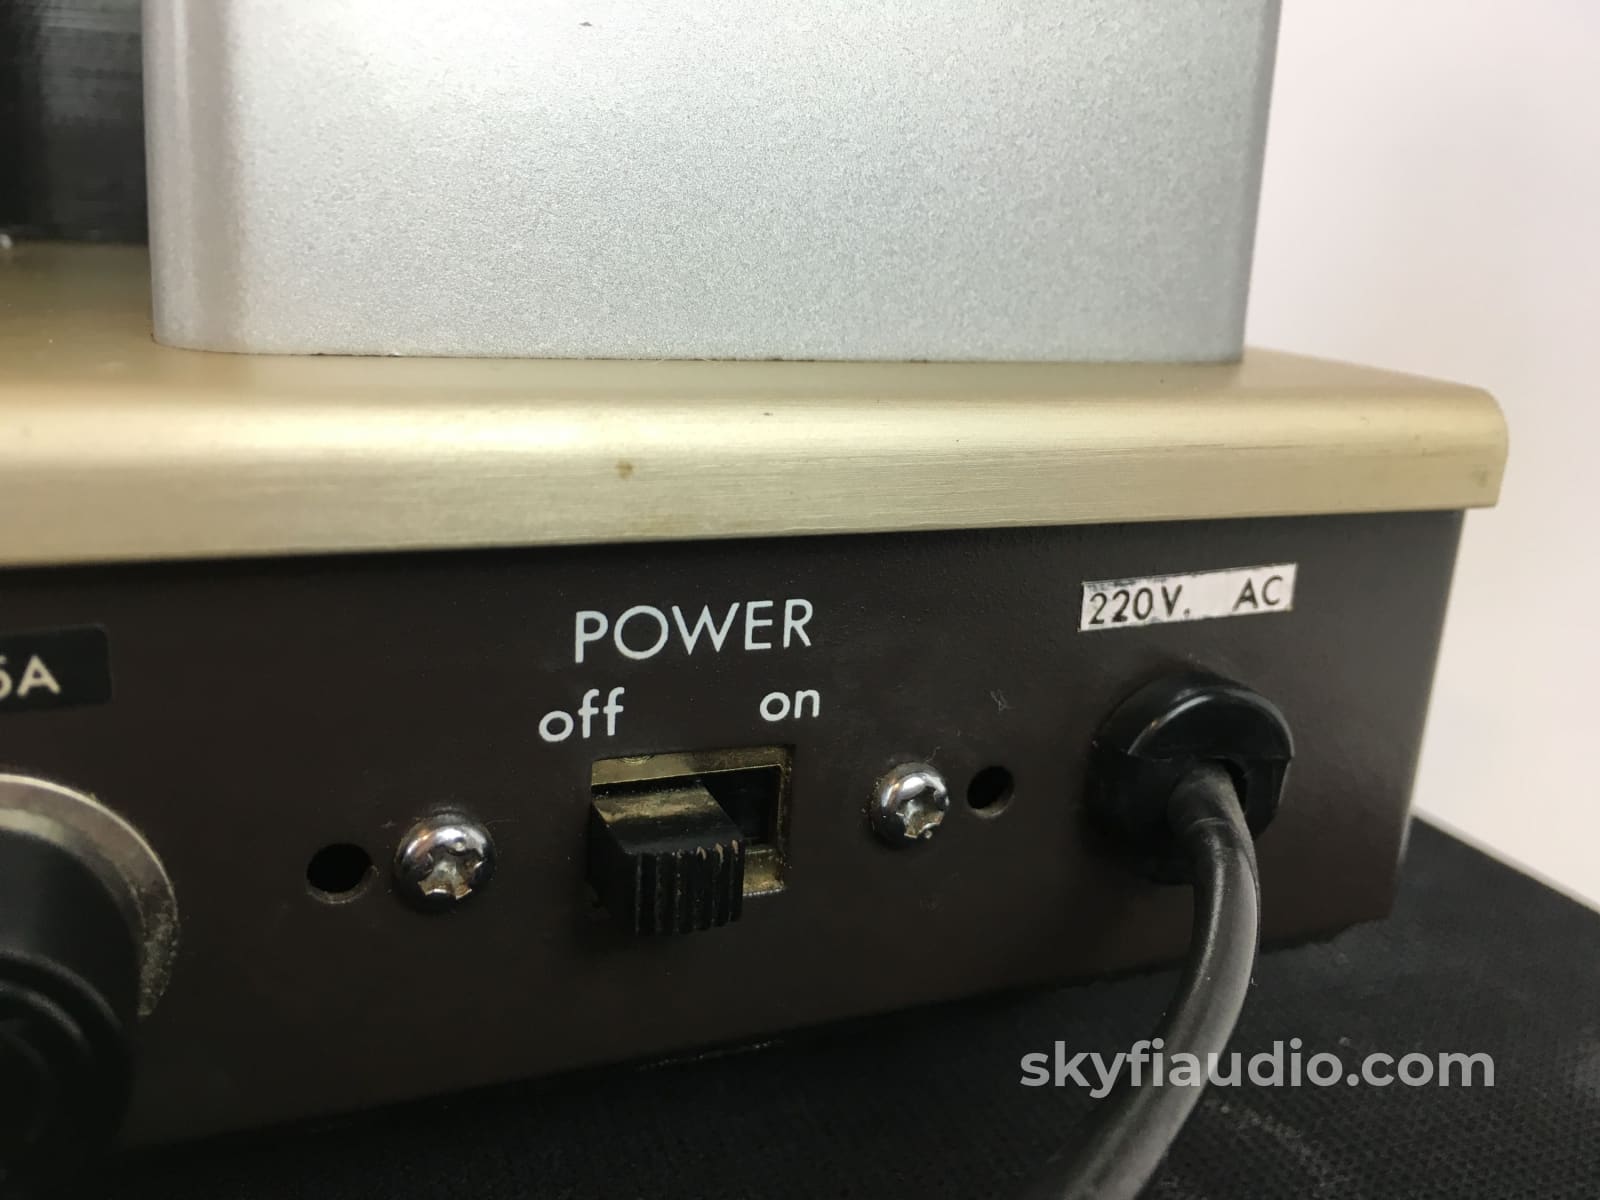 Luxman Mq-70 Stereo Tube Amplifier - 220V